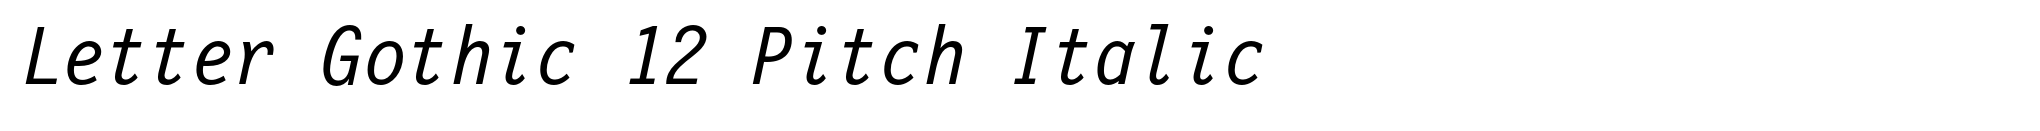 Letter Gothic 12 Pitch Italic image